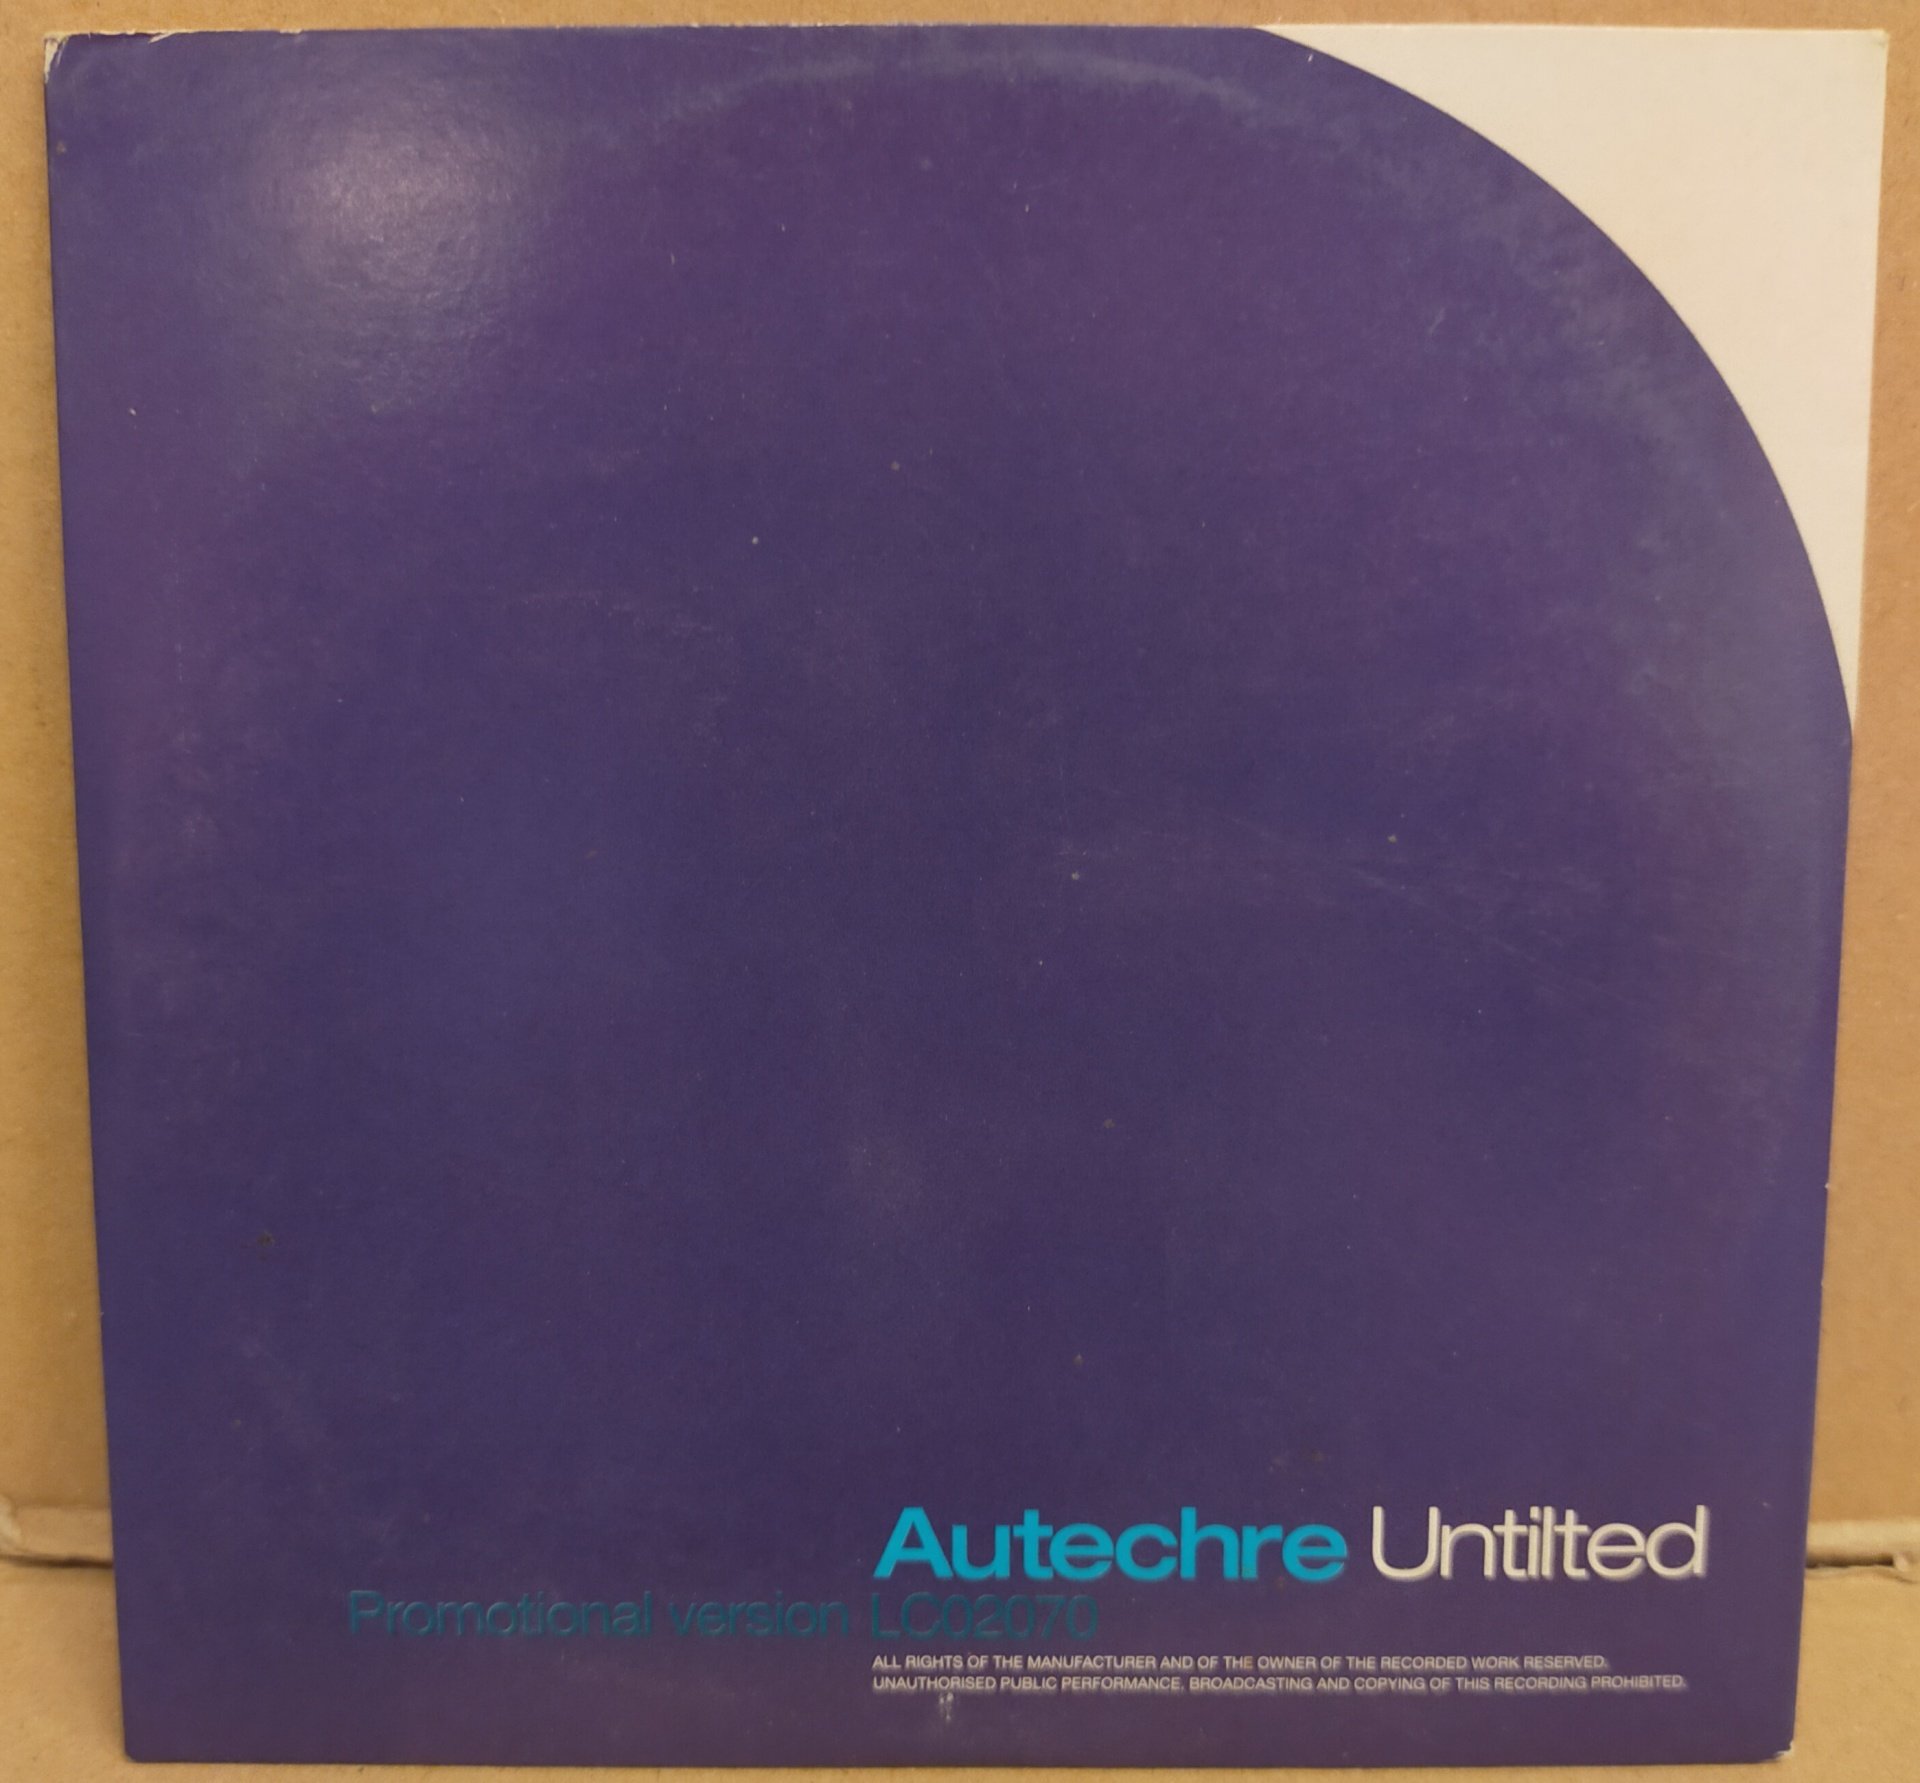 AUTECHRE - UNTITLED / PROMOTIONAL VERSION (2005) - CARDSLEEVE CD 2.EL